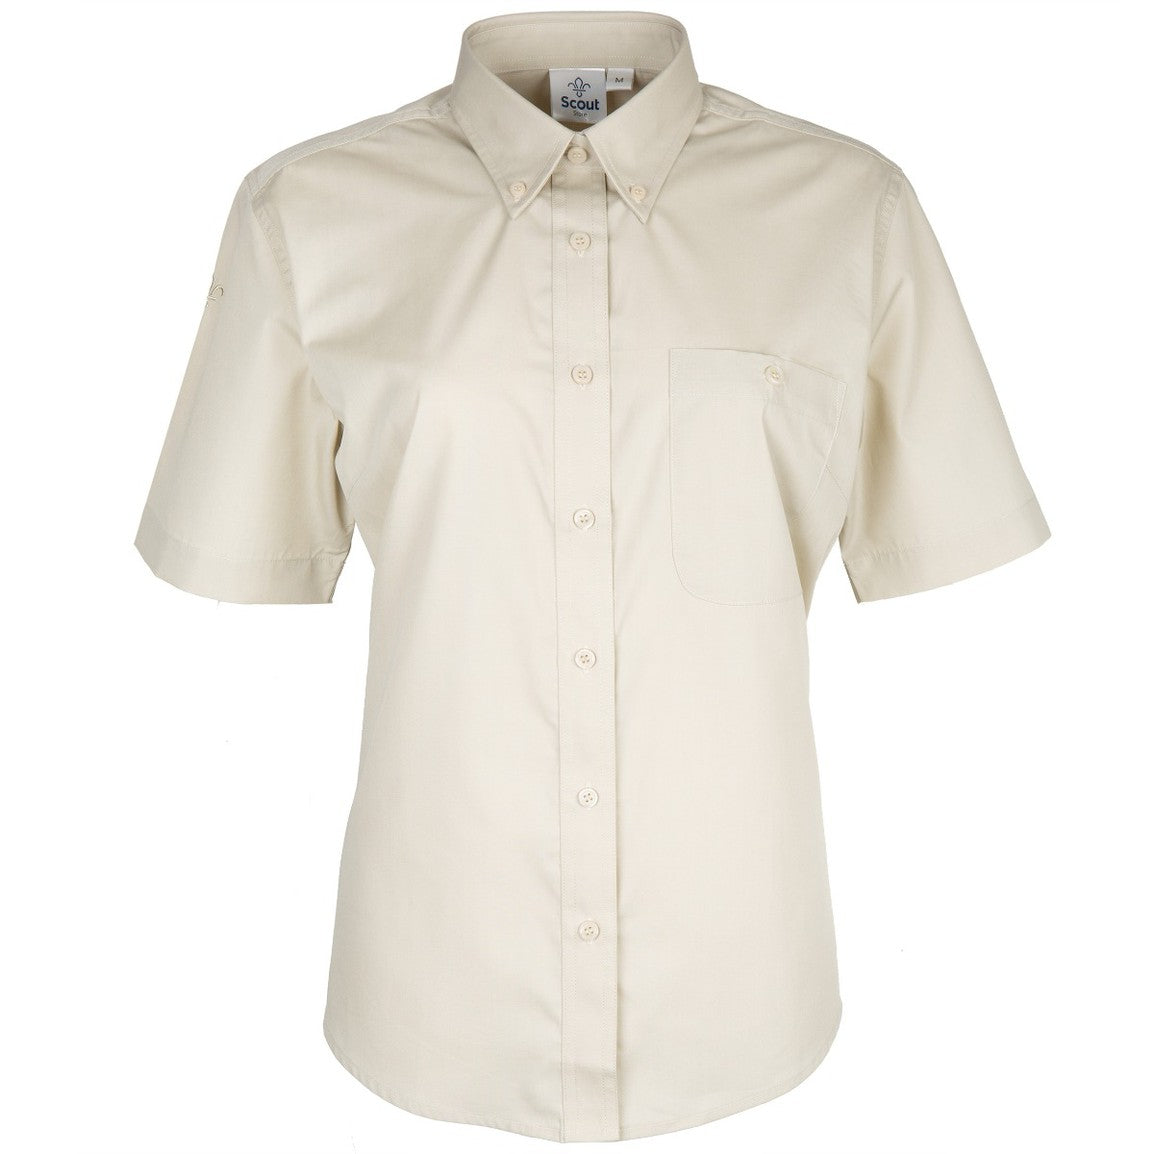 Adult Leader / Network Scout Short Sleeve Uniform Blouse